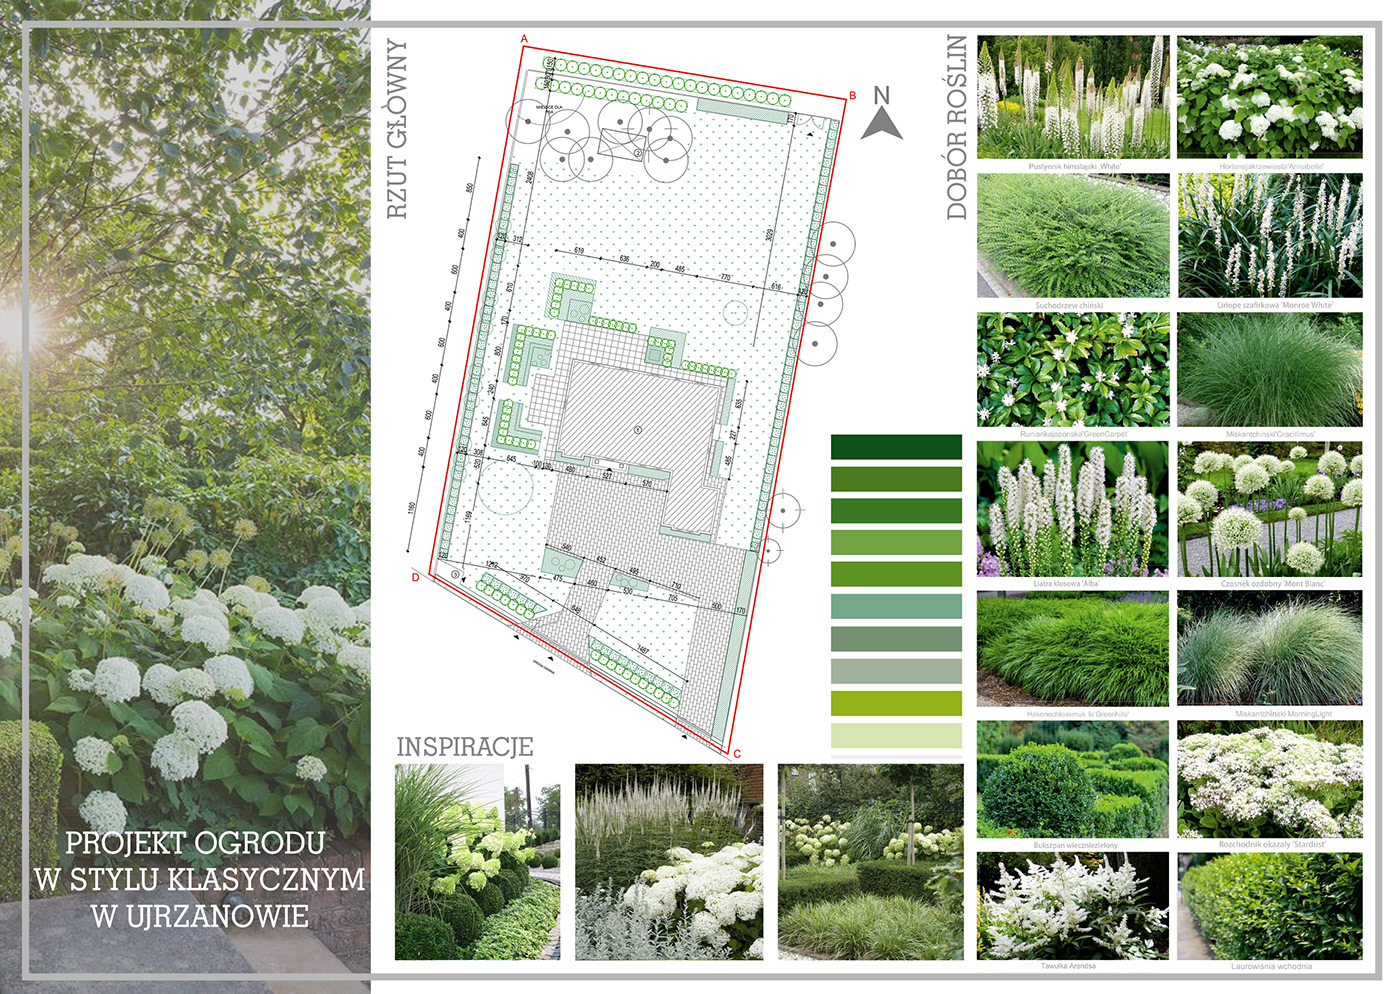 architektura krajobrazu projekt ogrodu Rośliny ogród